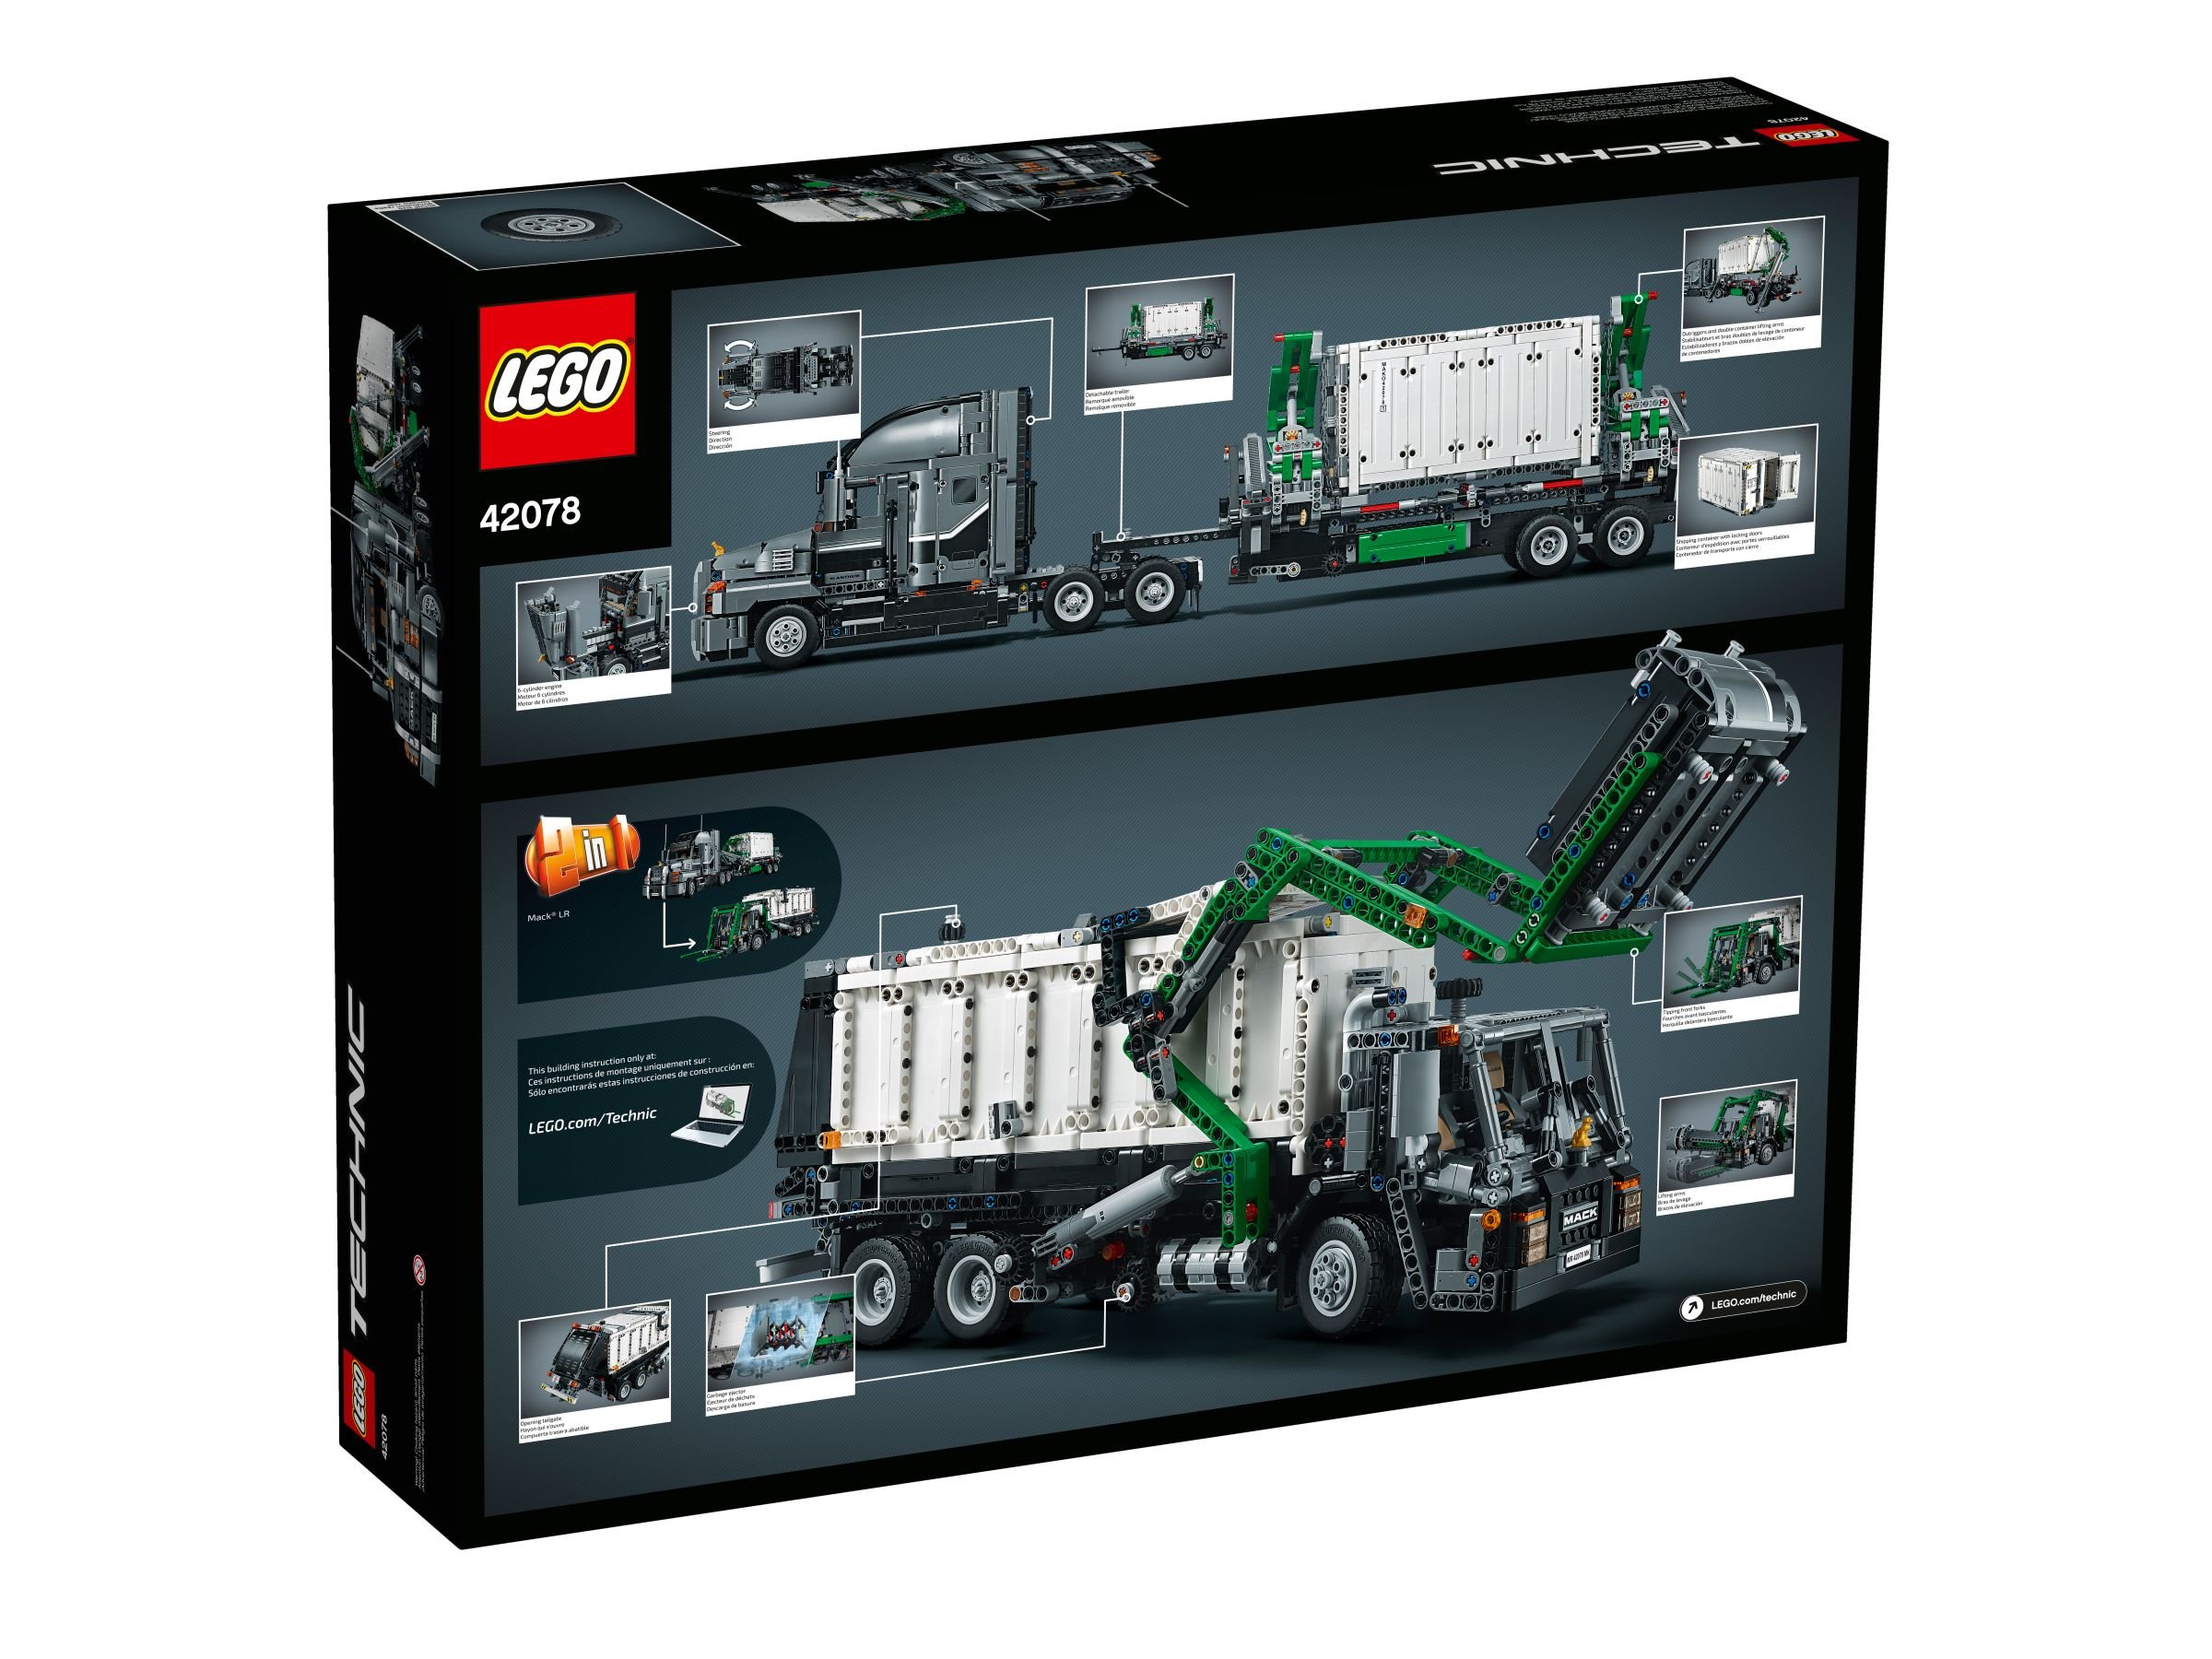 LEGO Technic 42078 Mack Anthem LEGO_42078_alt2.jpg